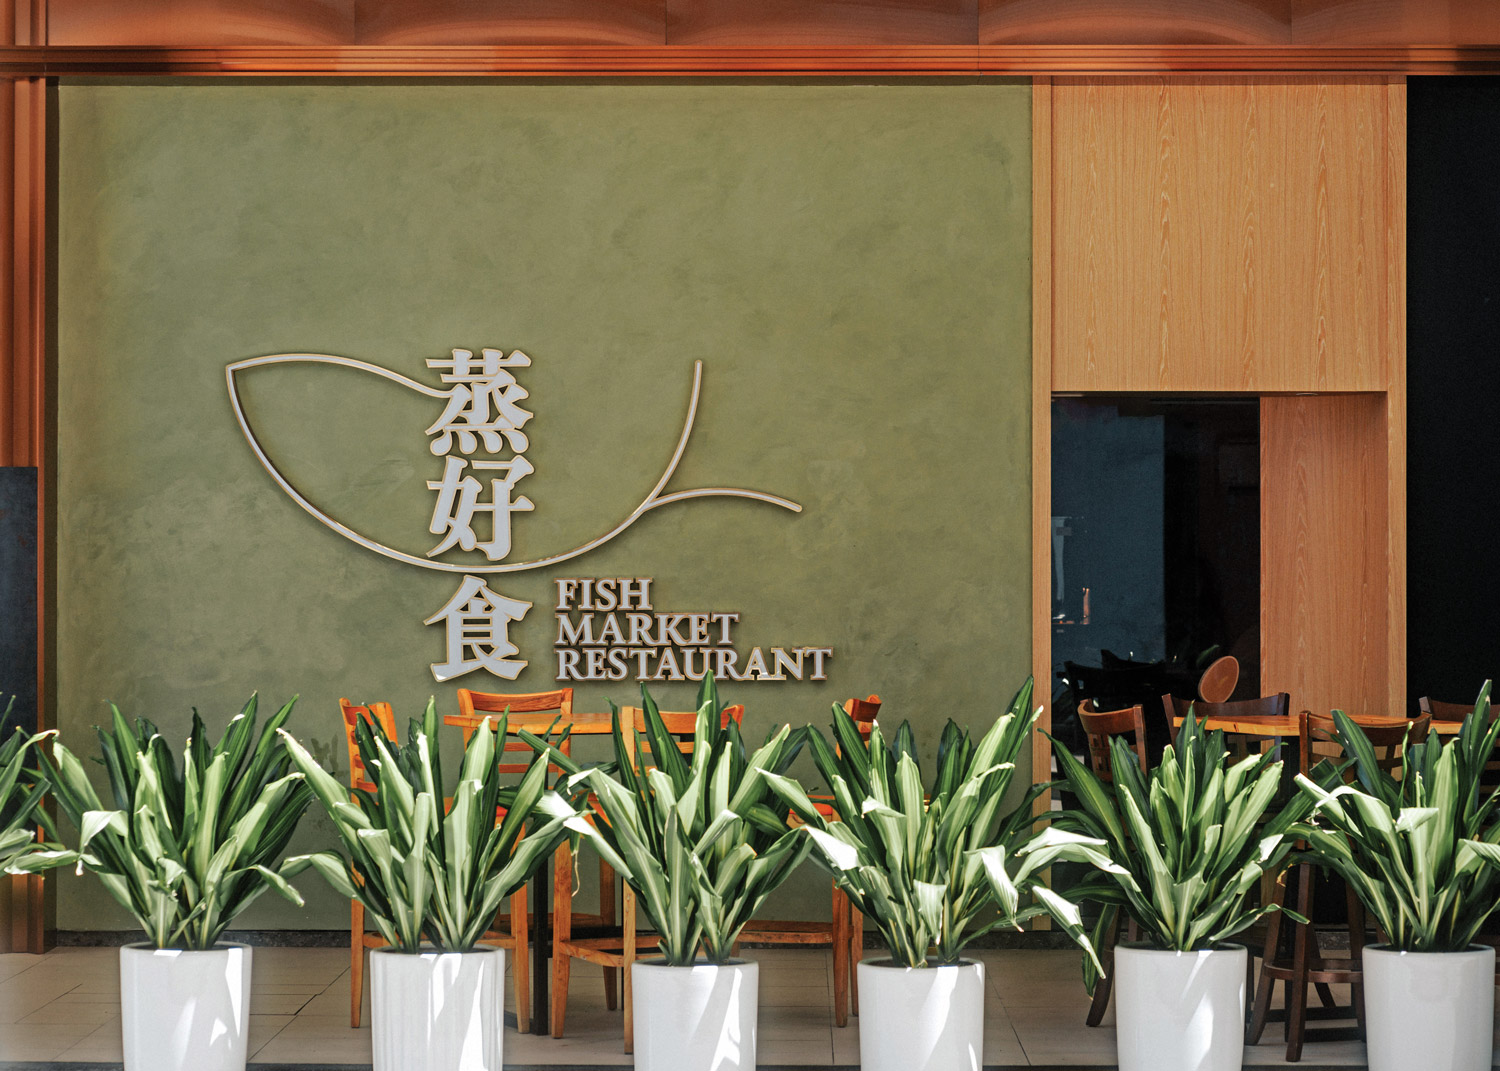 Fish Market Restaurant 蒸好食: The Gold List 2022 - Best Restaurant